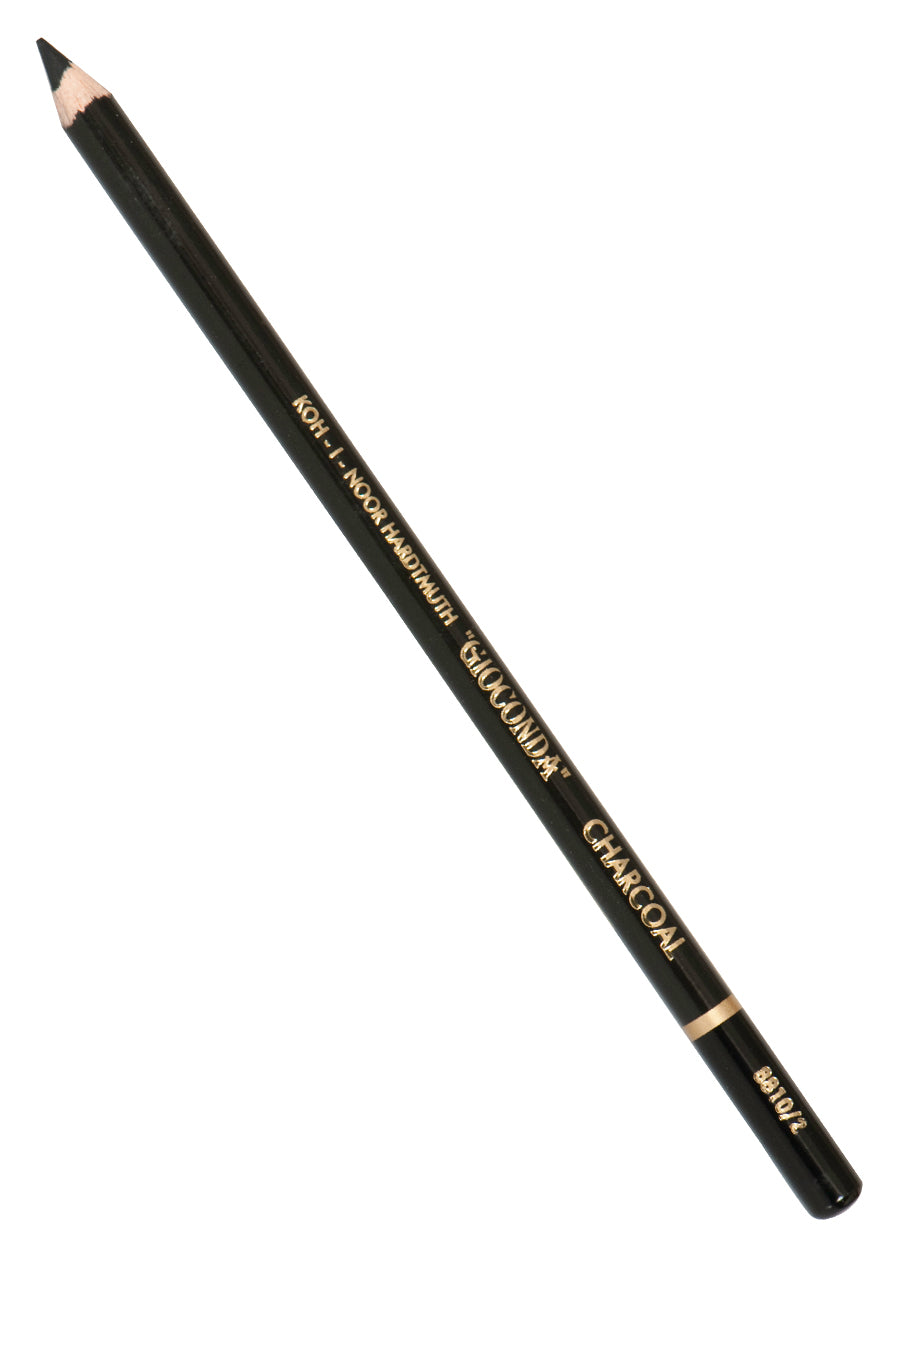 Koh-I-Noor Hardtmuth Gioconda Chalk Pencil Silky Black